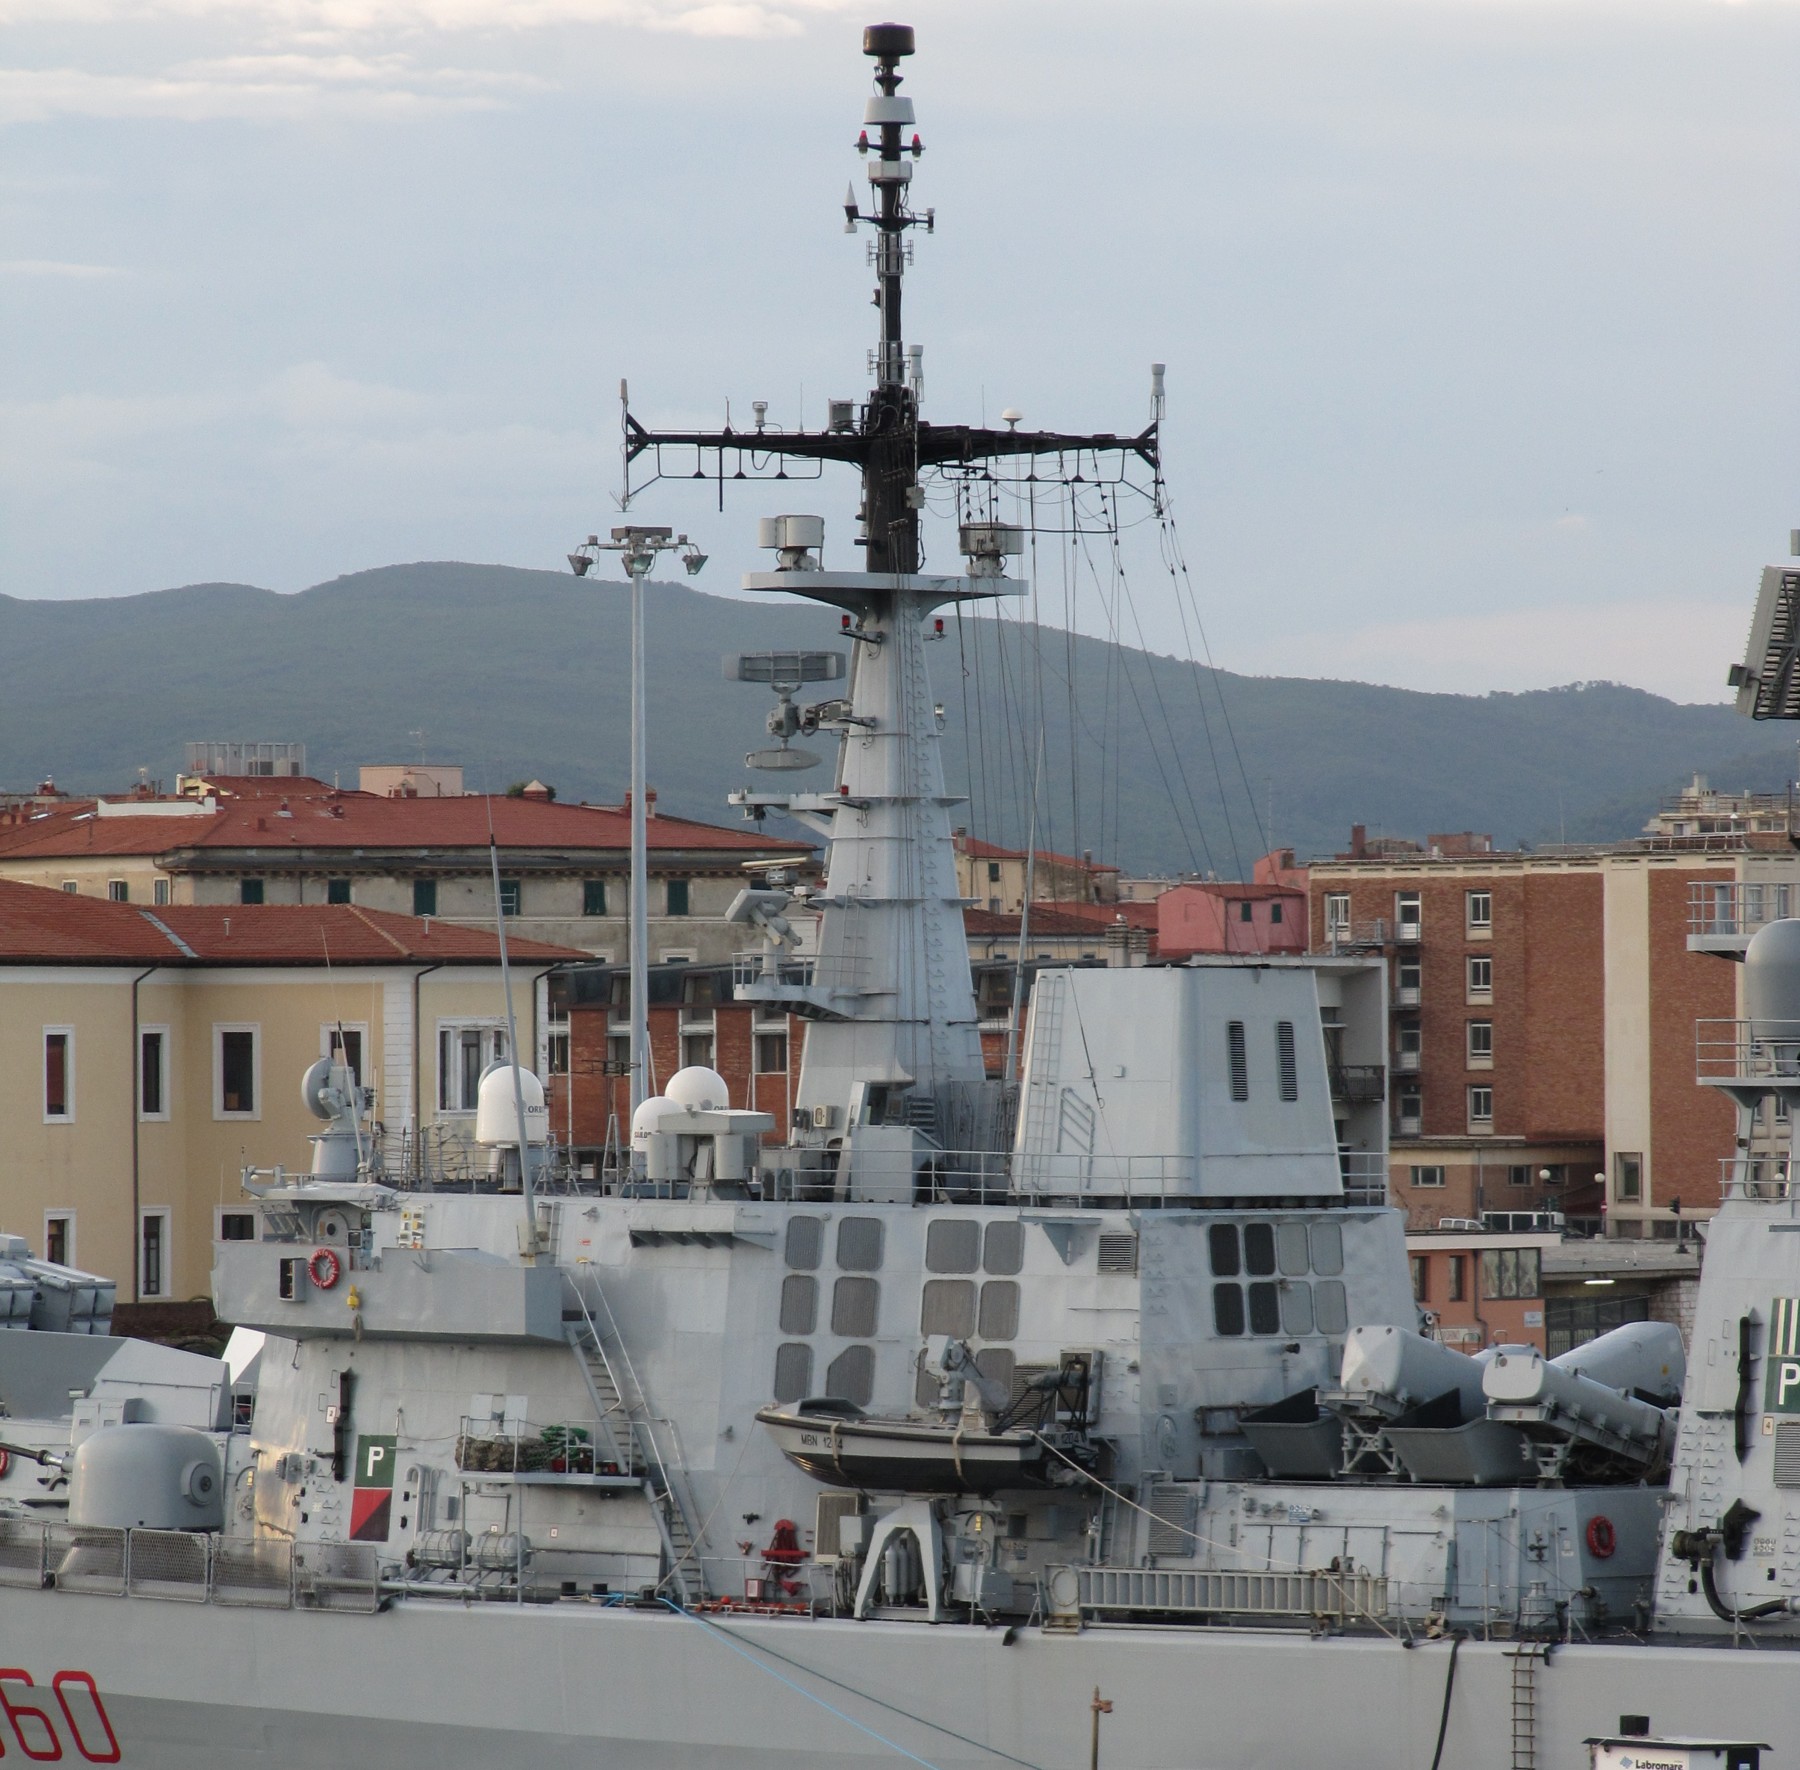 d-560 luigi durand de la penne its nave guided missile destroyer ddg italian navy marina militare 71